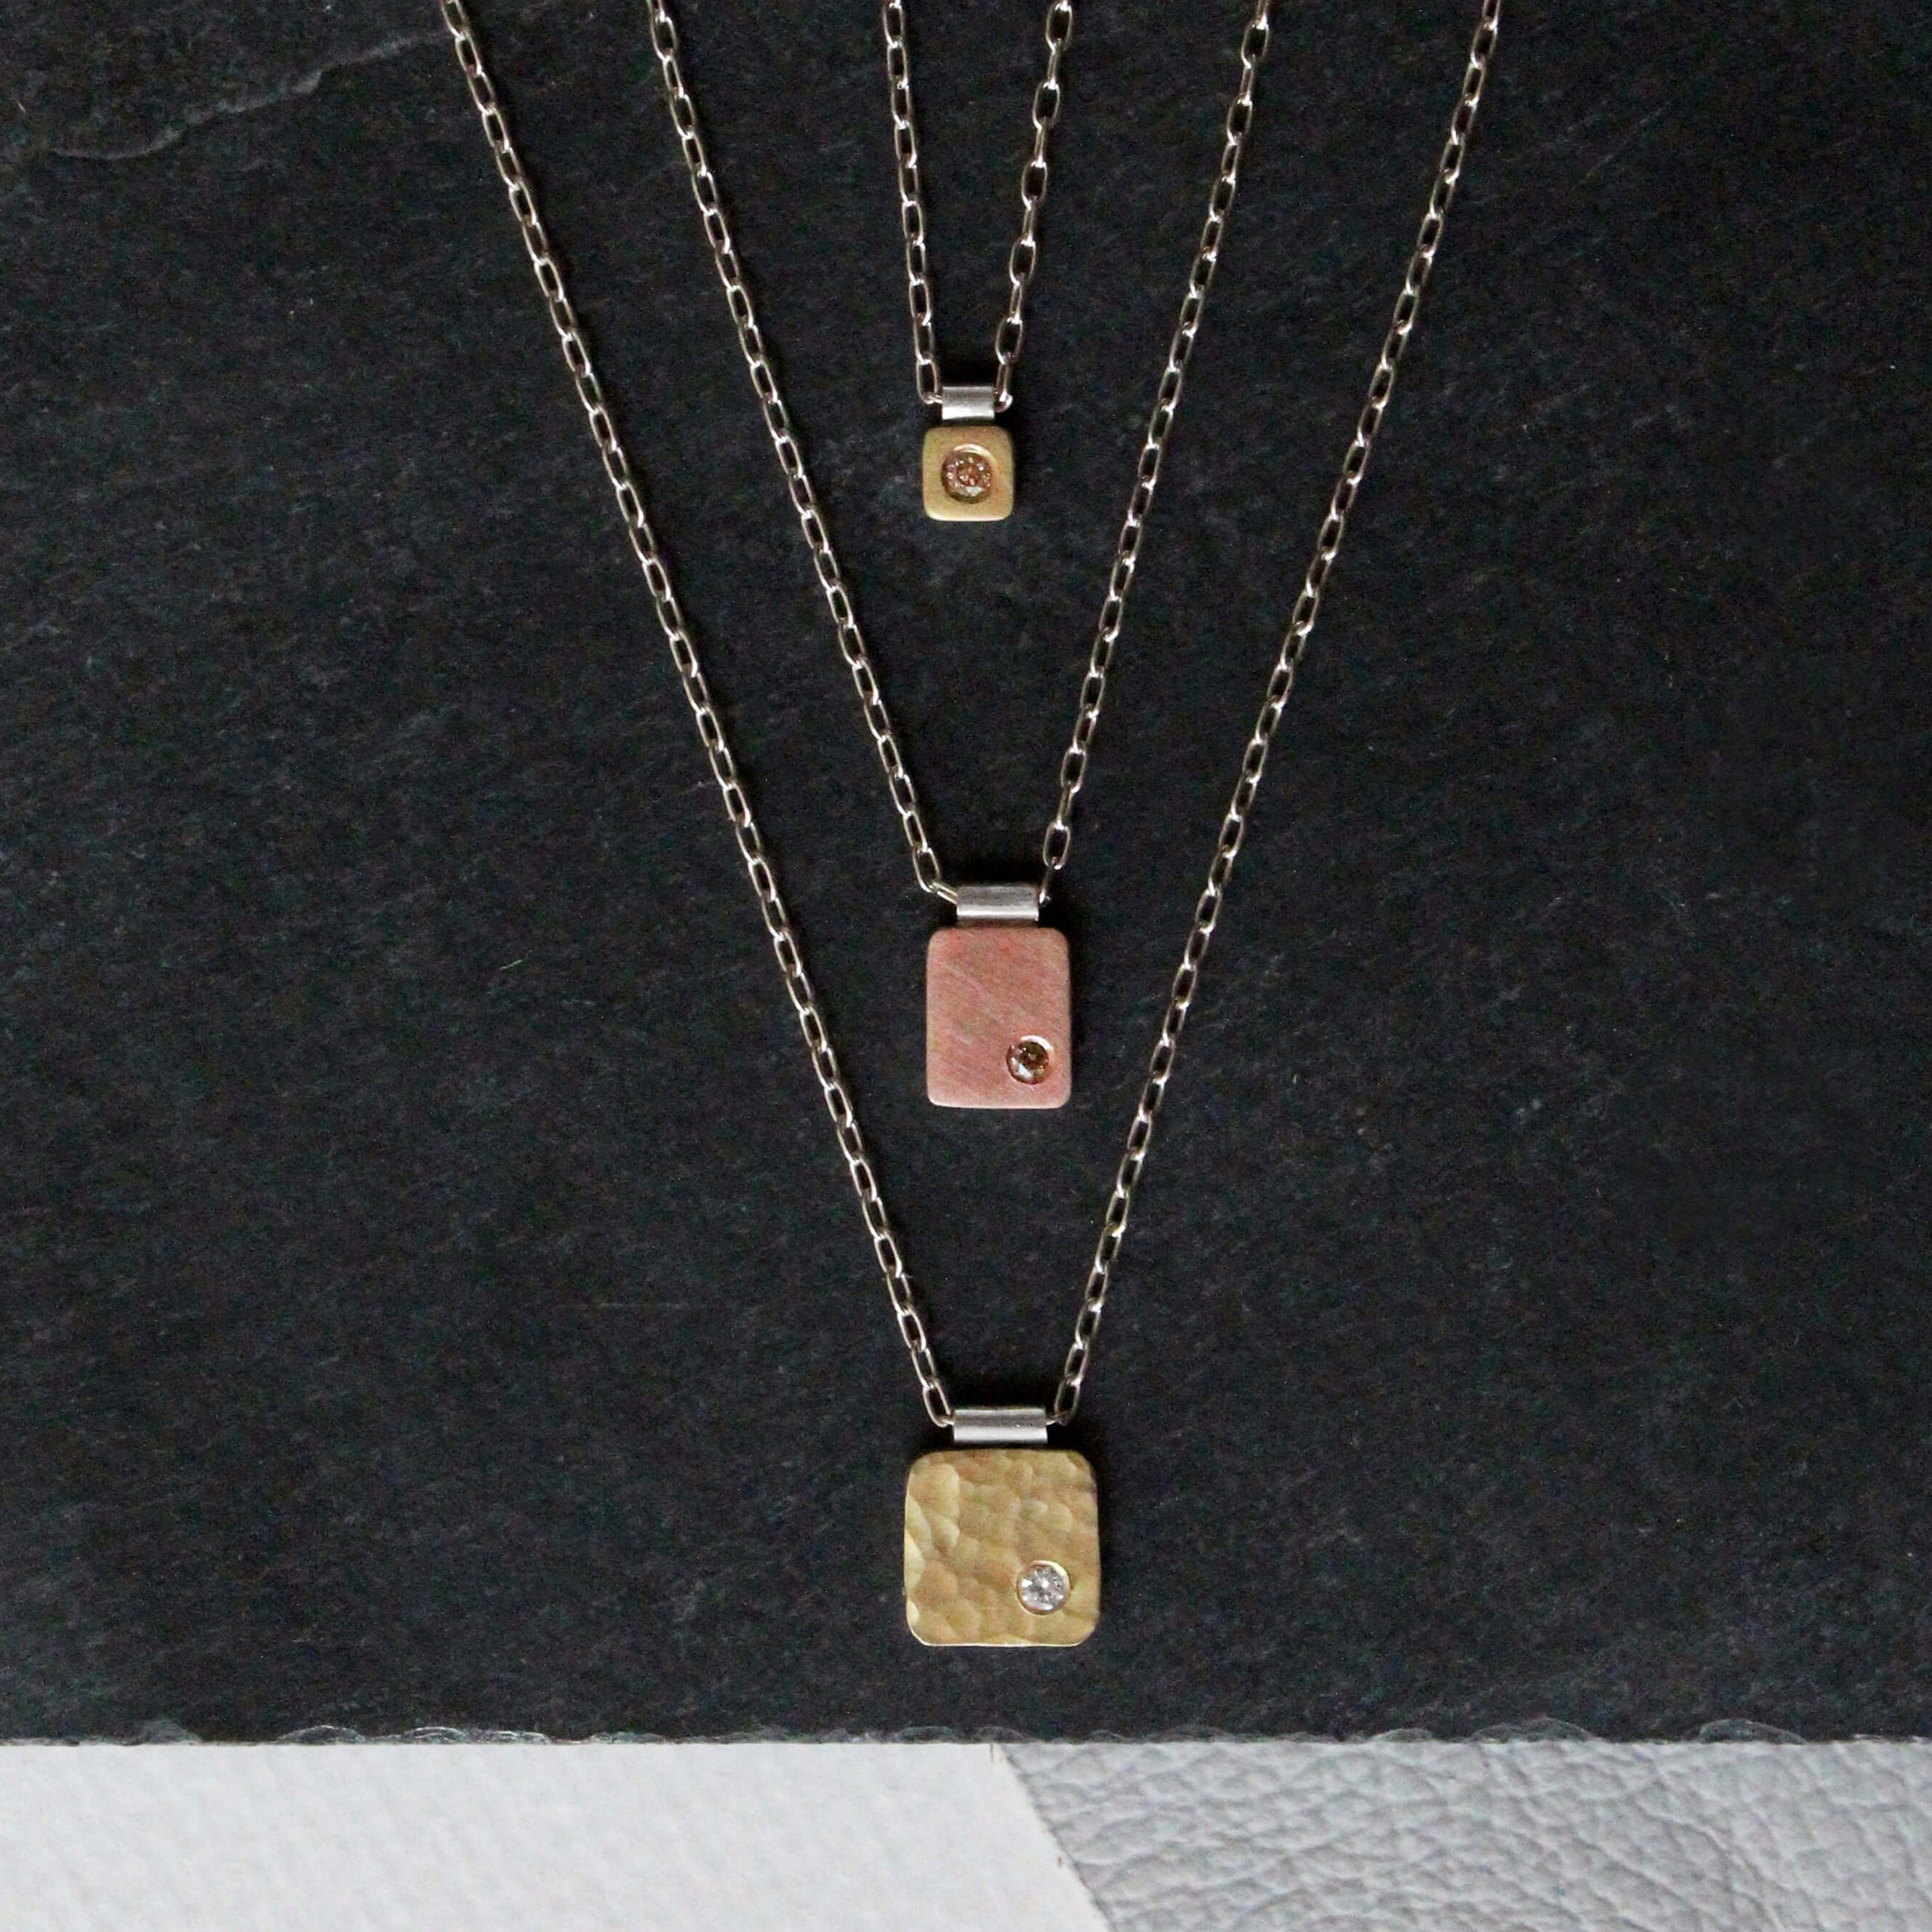 Sweet Tiny Diamond Necklace Hammered Gold Diamond Pendant